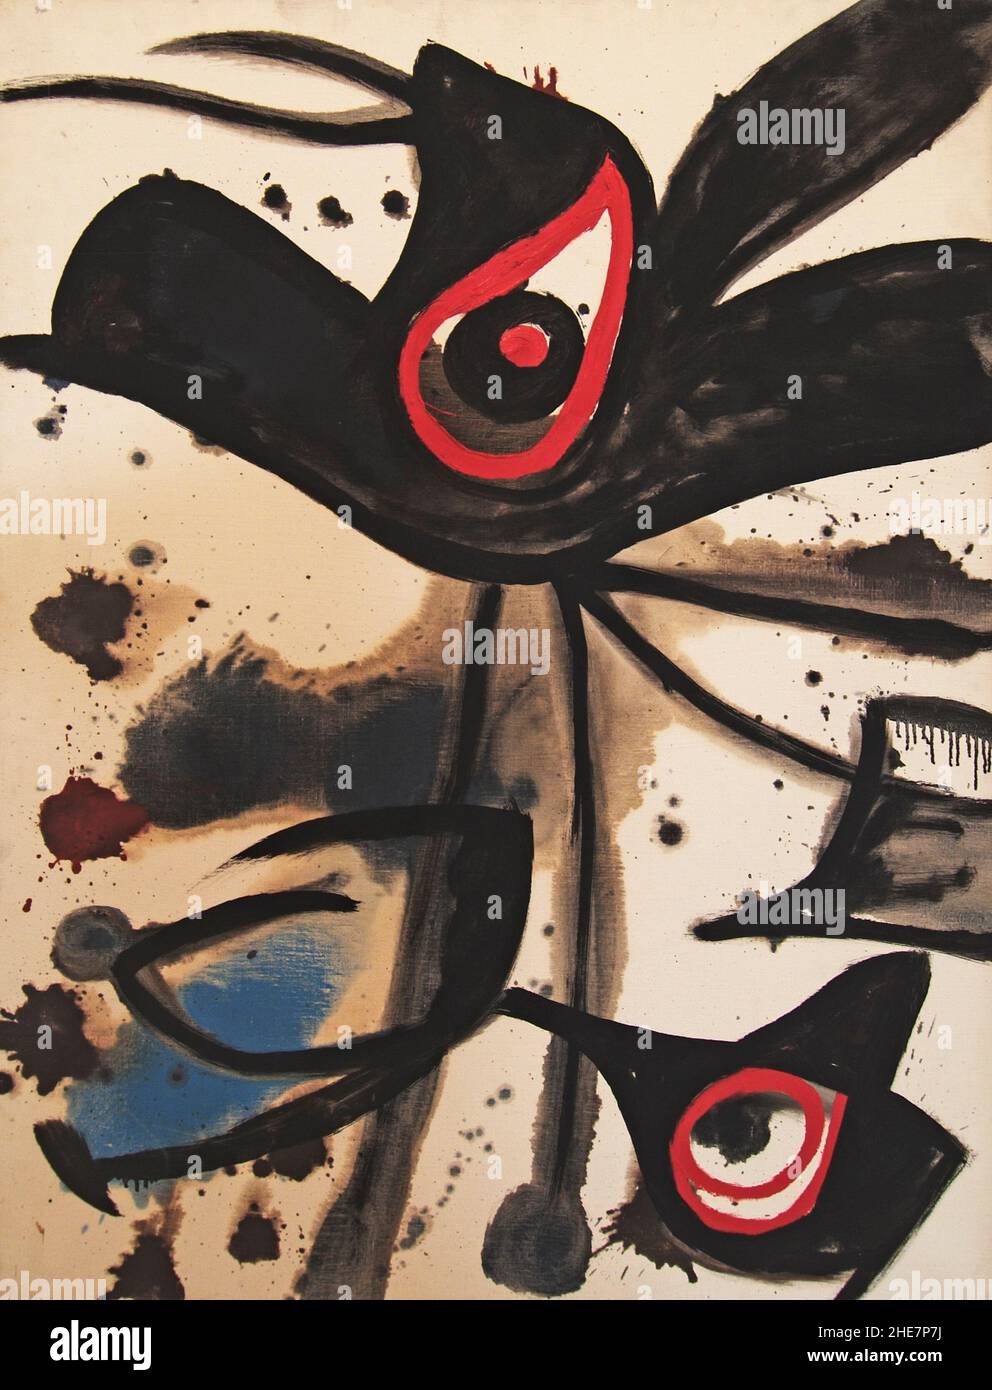 Museo Miró, Pilar i Joan Miró-Stiftung, Oiseaux, 1973, Öl und Acryl auf Leinwand, 115,5 x 88,5, Palma di Maiorca, Maiorca, spagnolo, Europa | Miró M Foto Stock